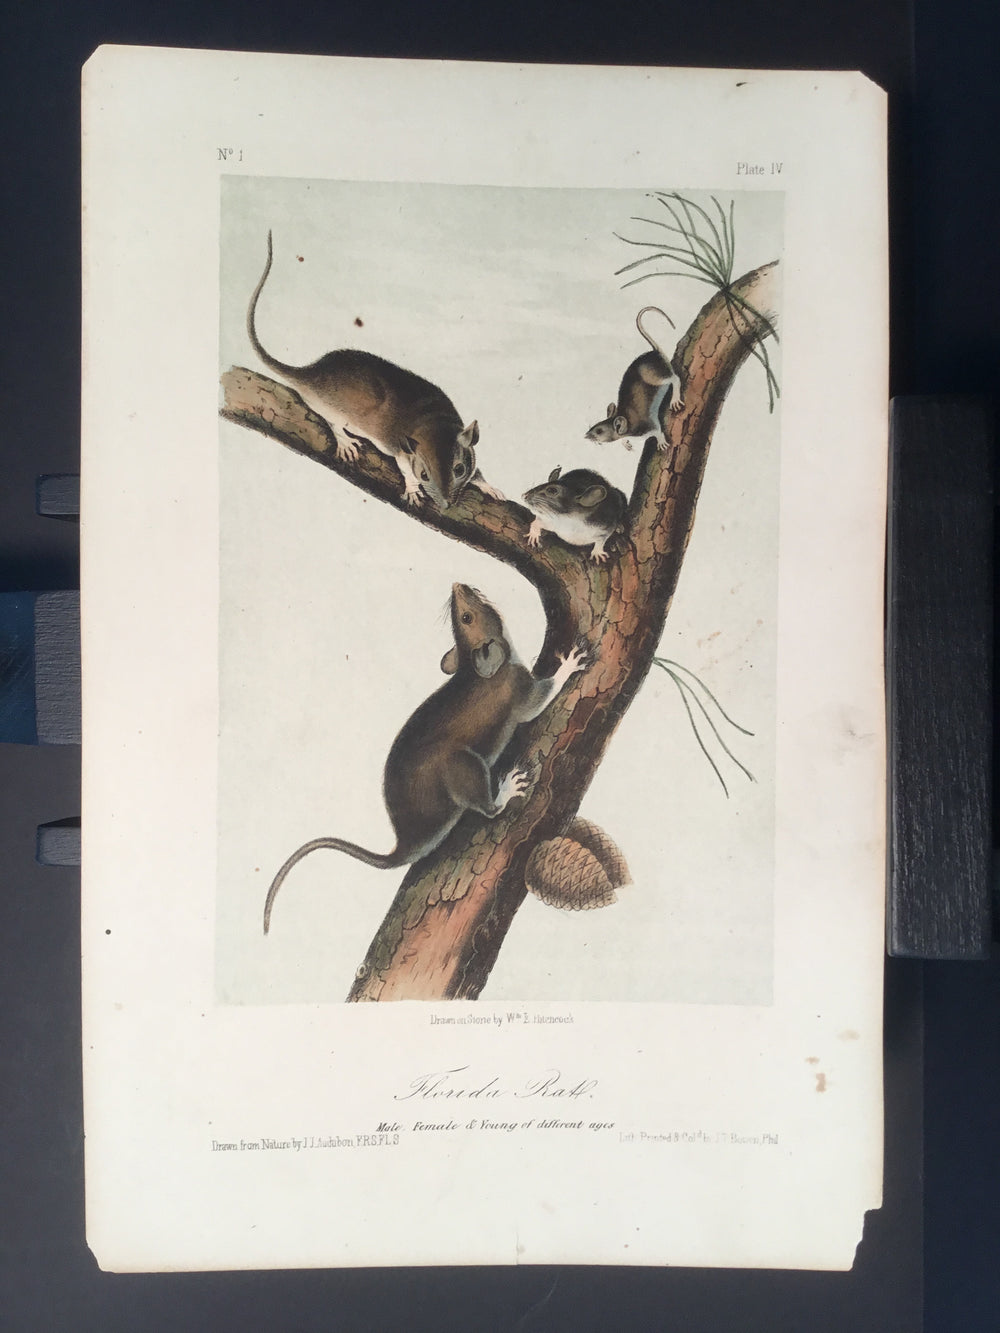 Lord-Hopkins Collection - Florida Rat